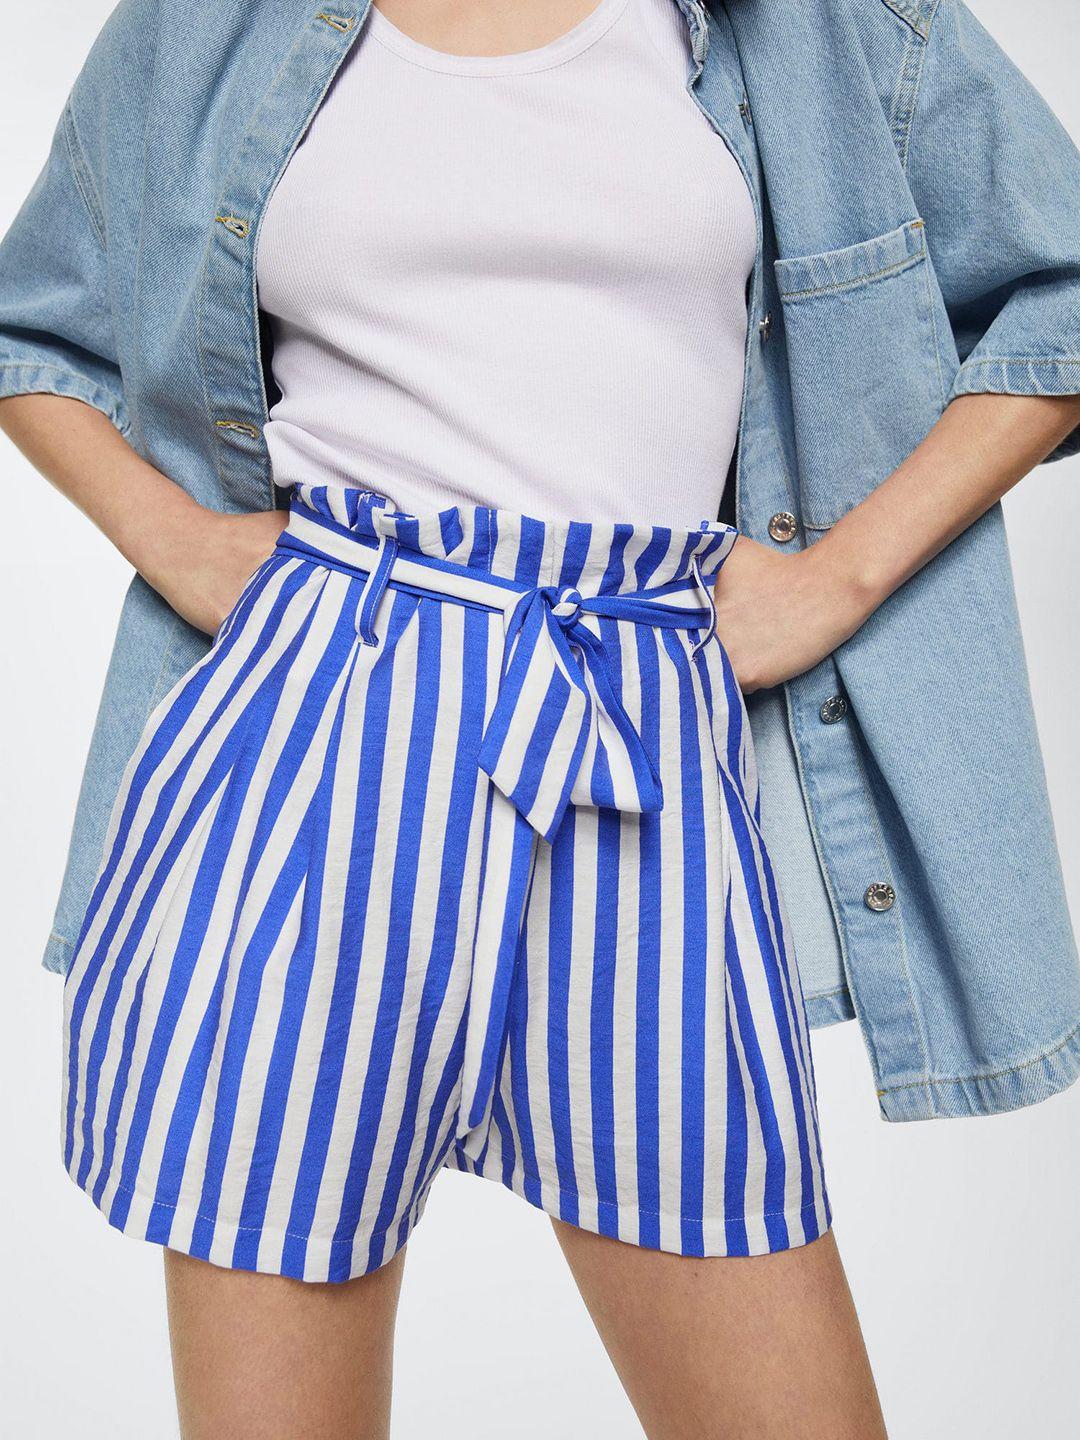 mango women white & blue striped shorts